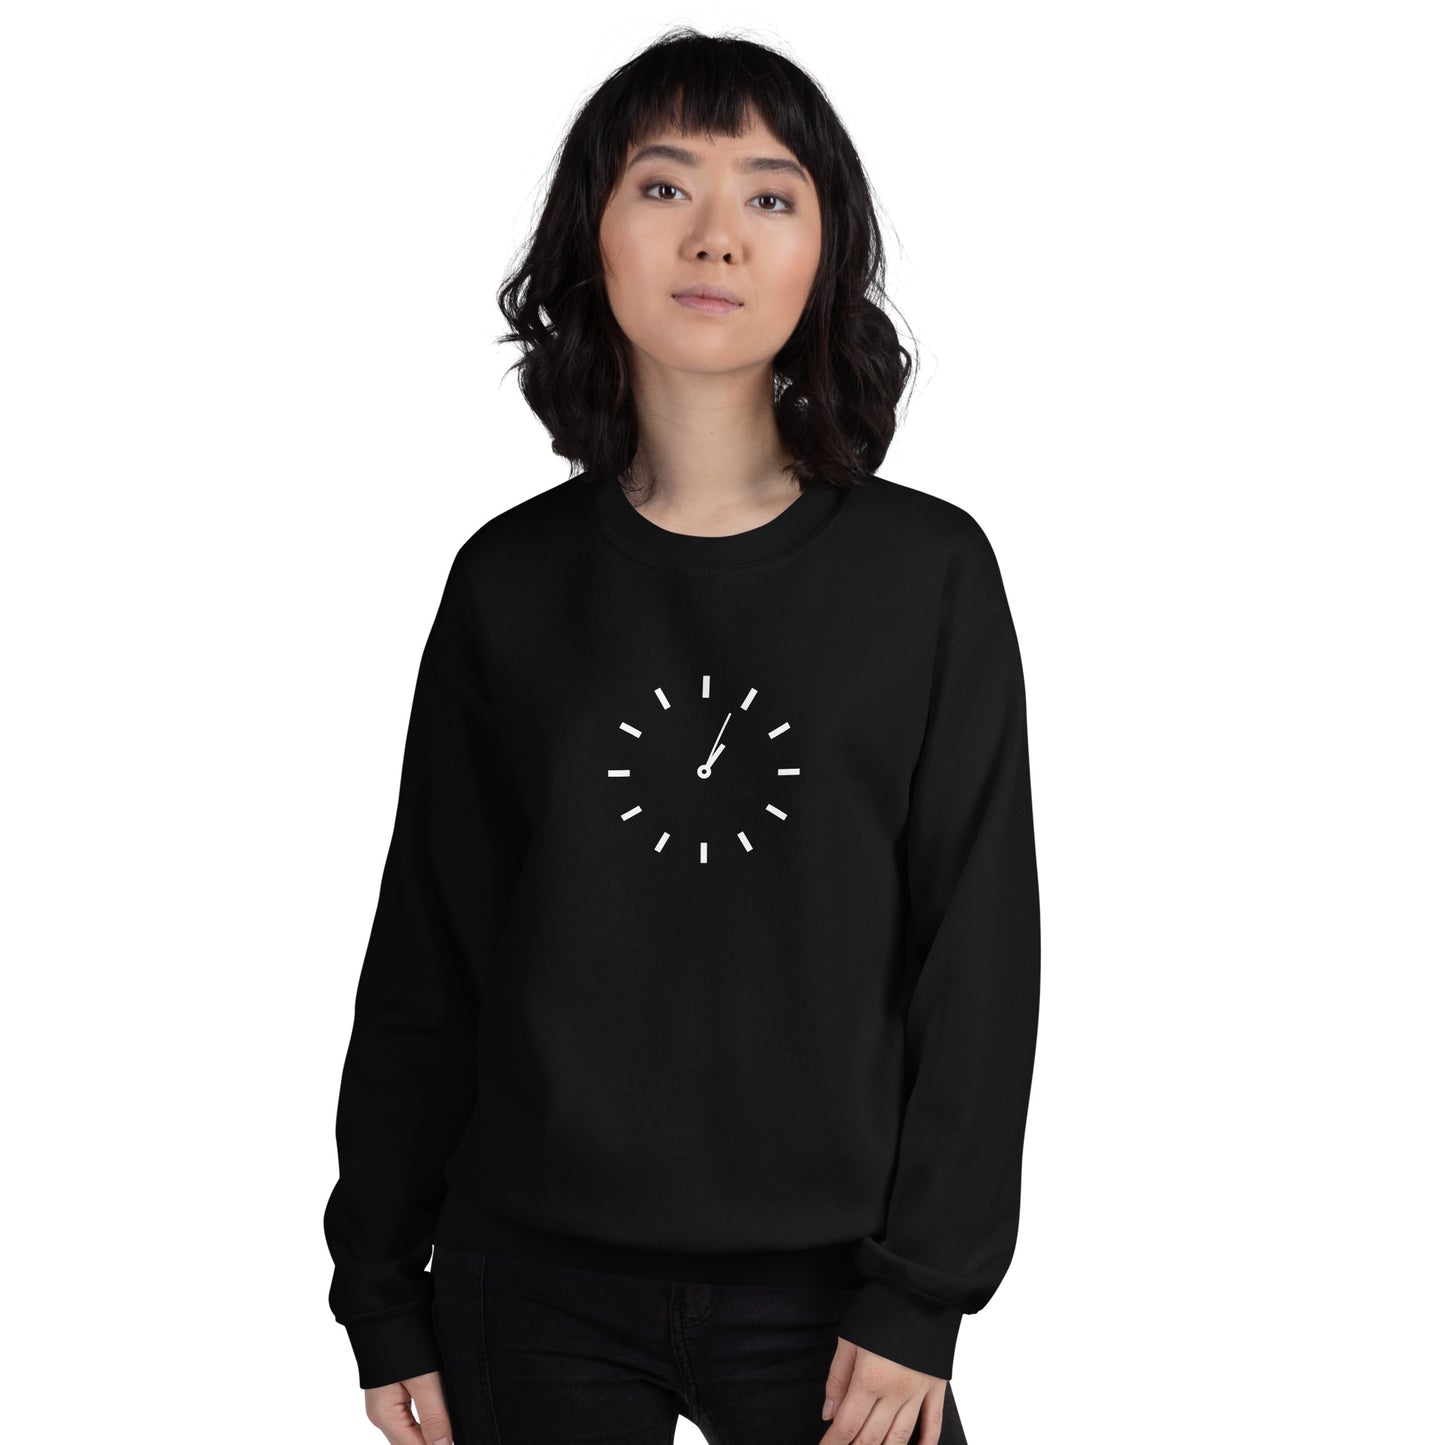 "1:04" Print Design Sweatshirt (Mens/Womens)